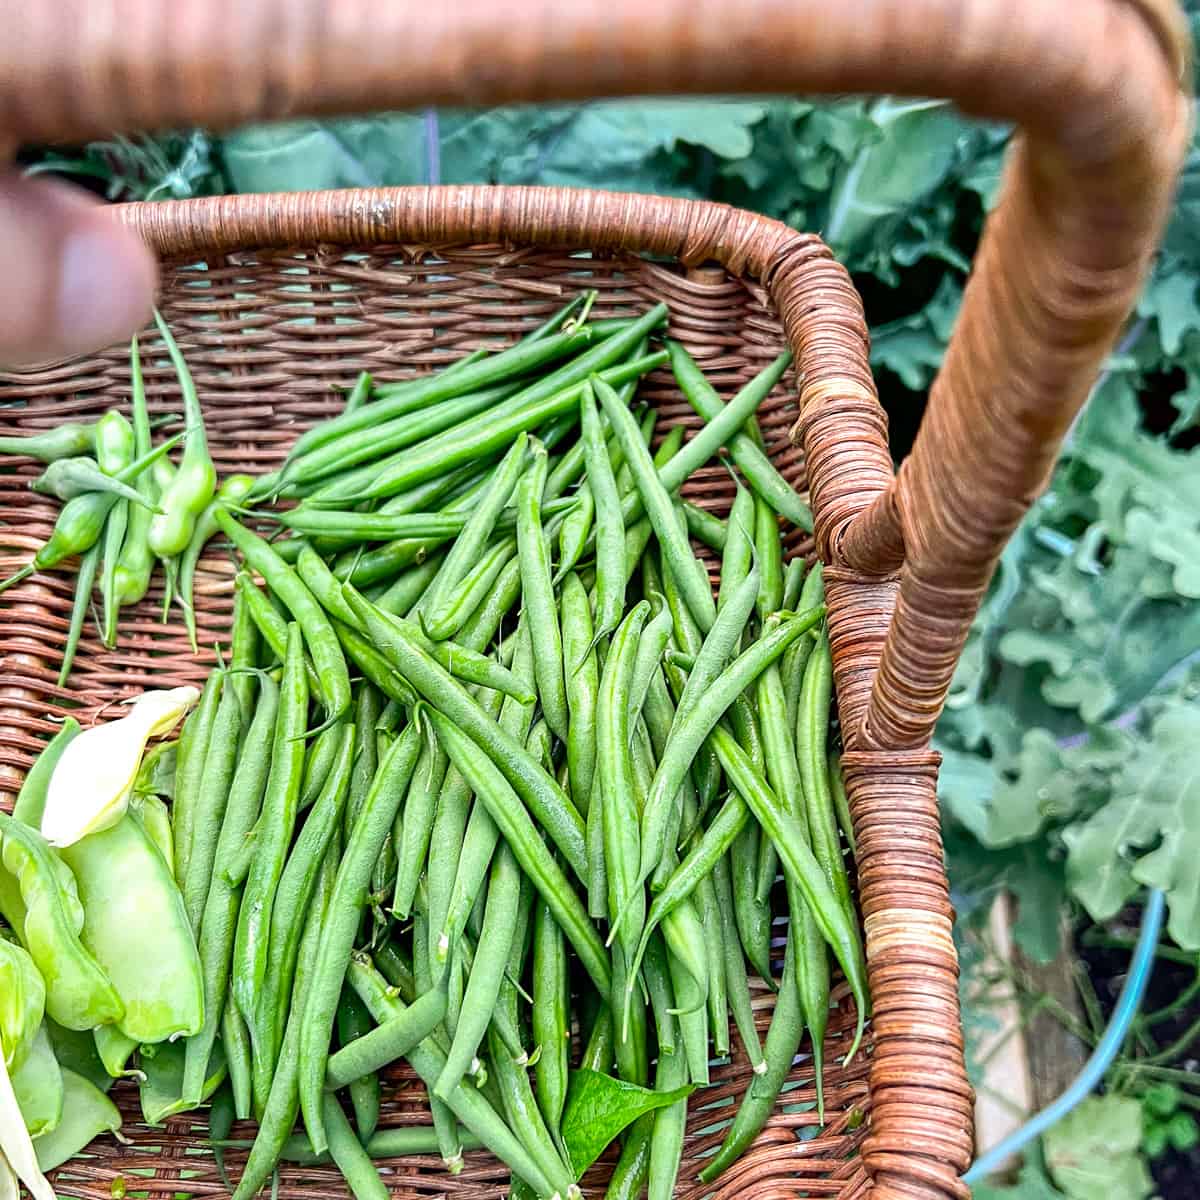 A basket full of freshly picked green beans.